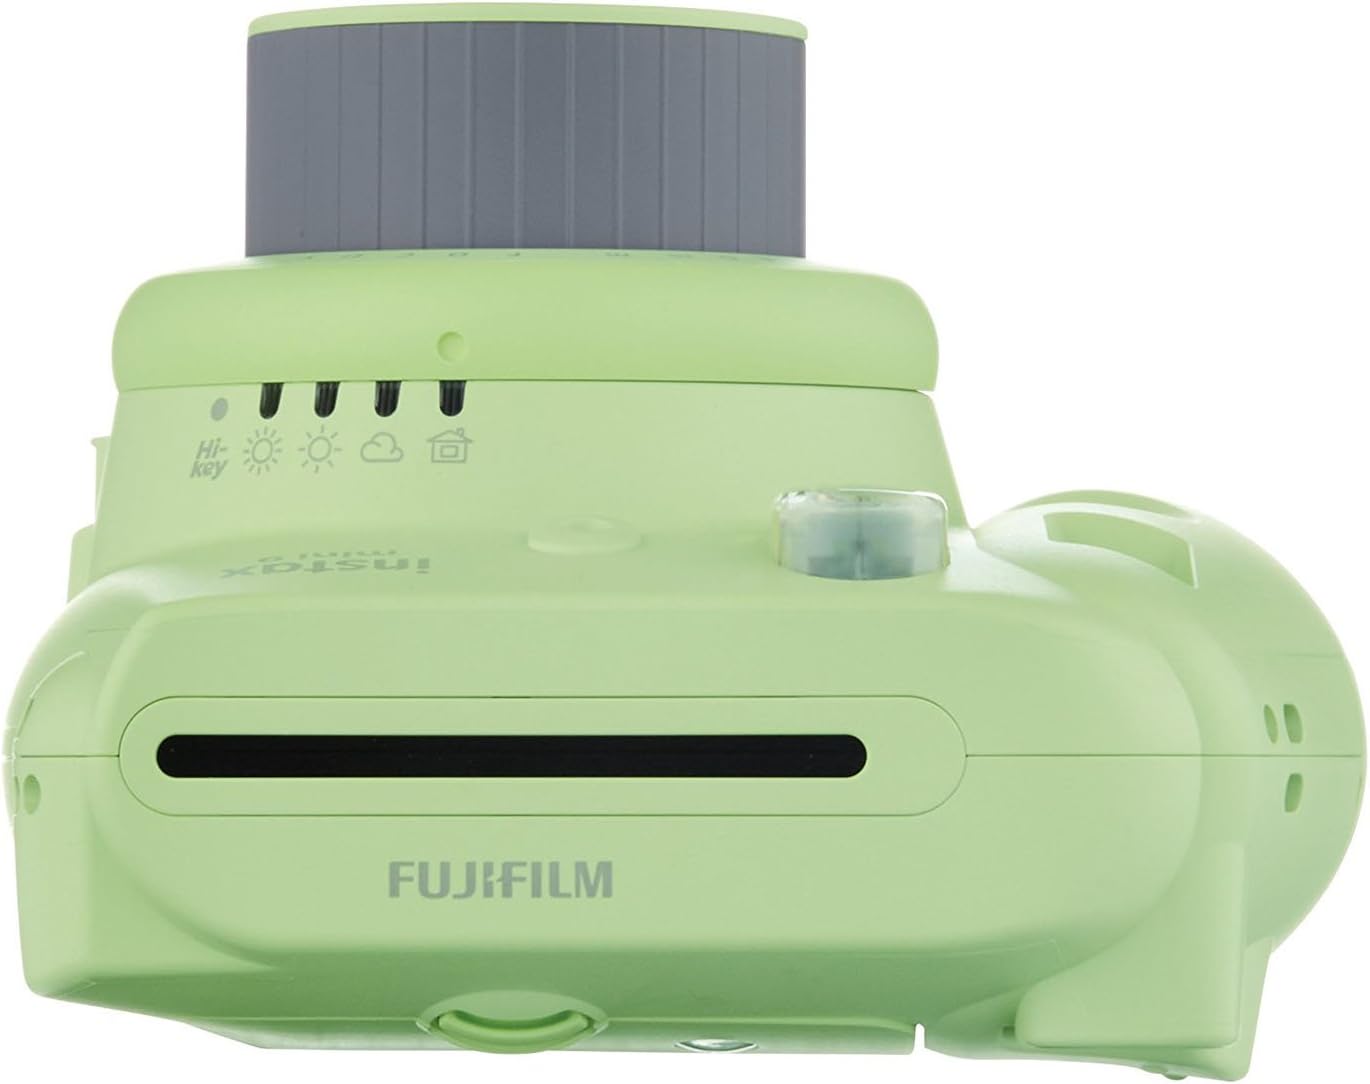 Fujifilm Instax Mini 9 Camera - Lime Green (inc 10 shot pack)